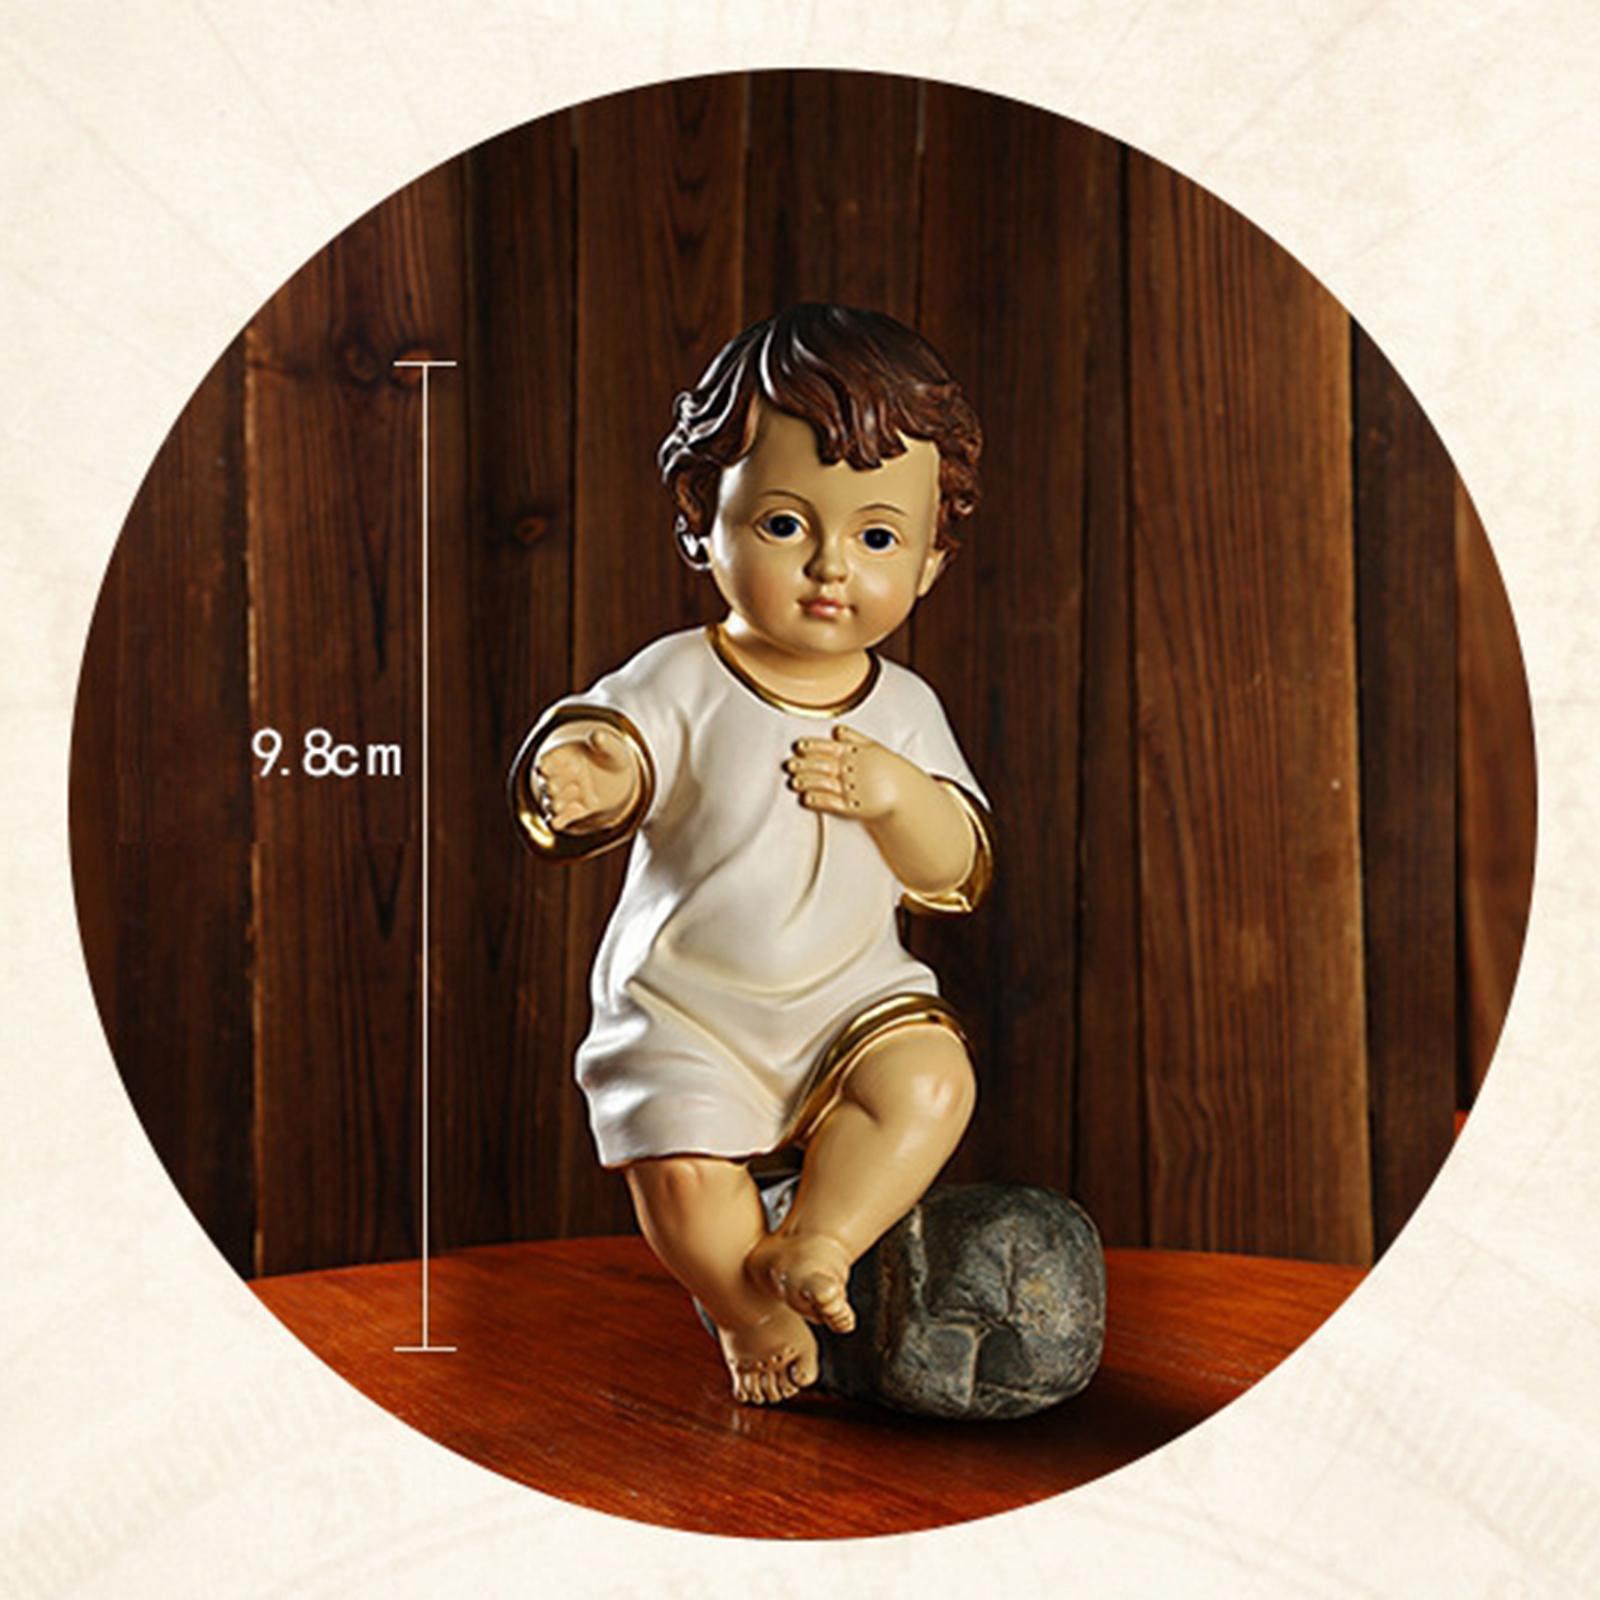 European Baby Figurine Ornament Gift Home Decoration Cute Boy Resin Statue